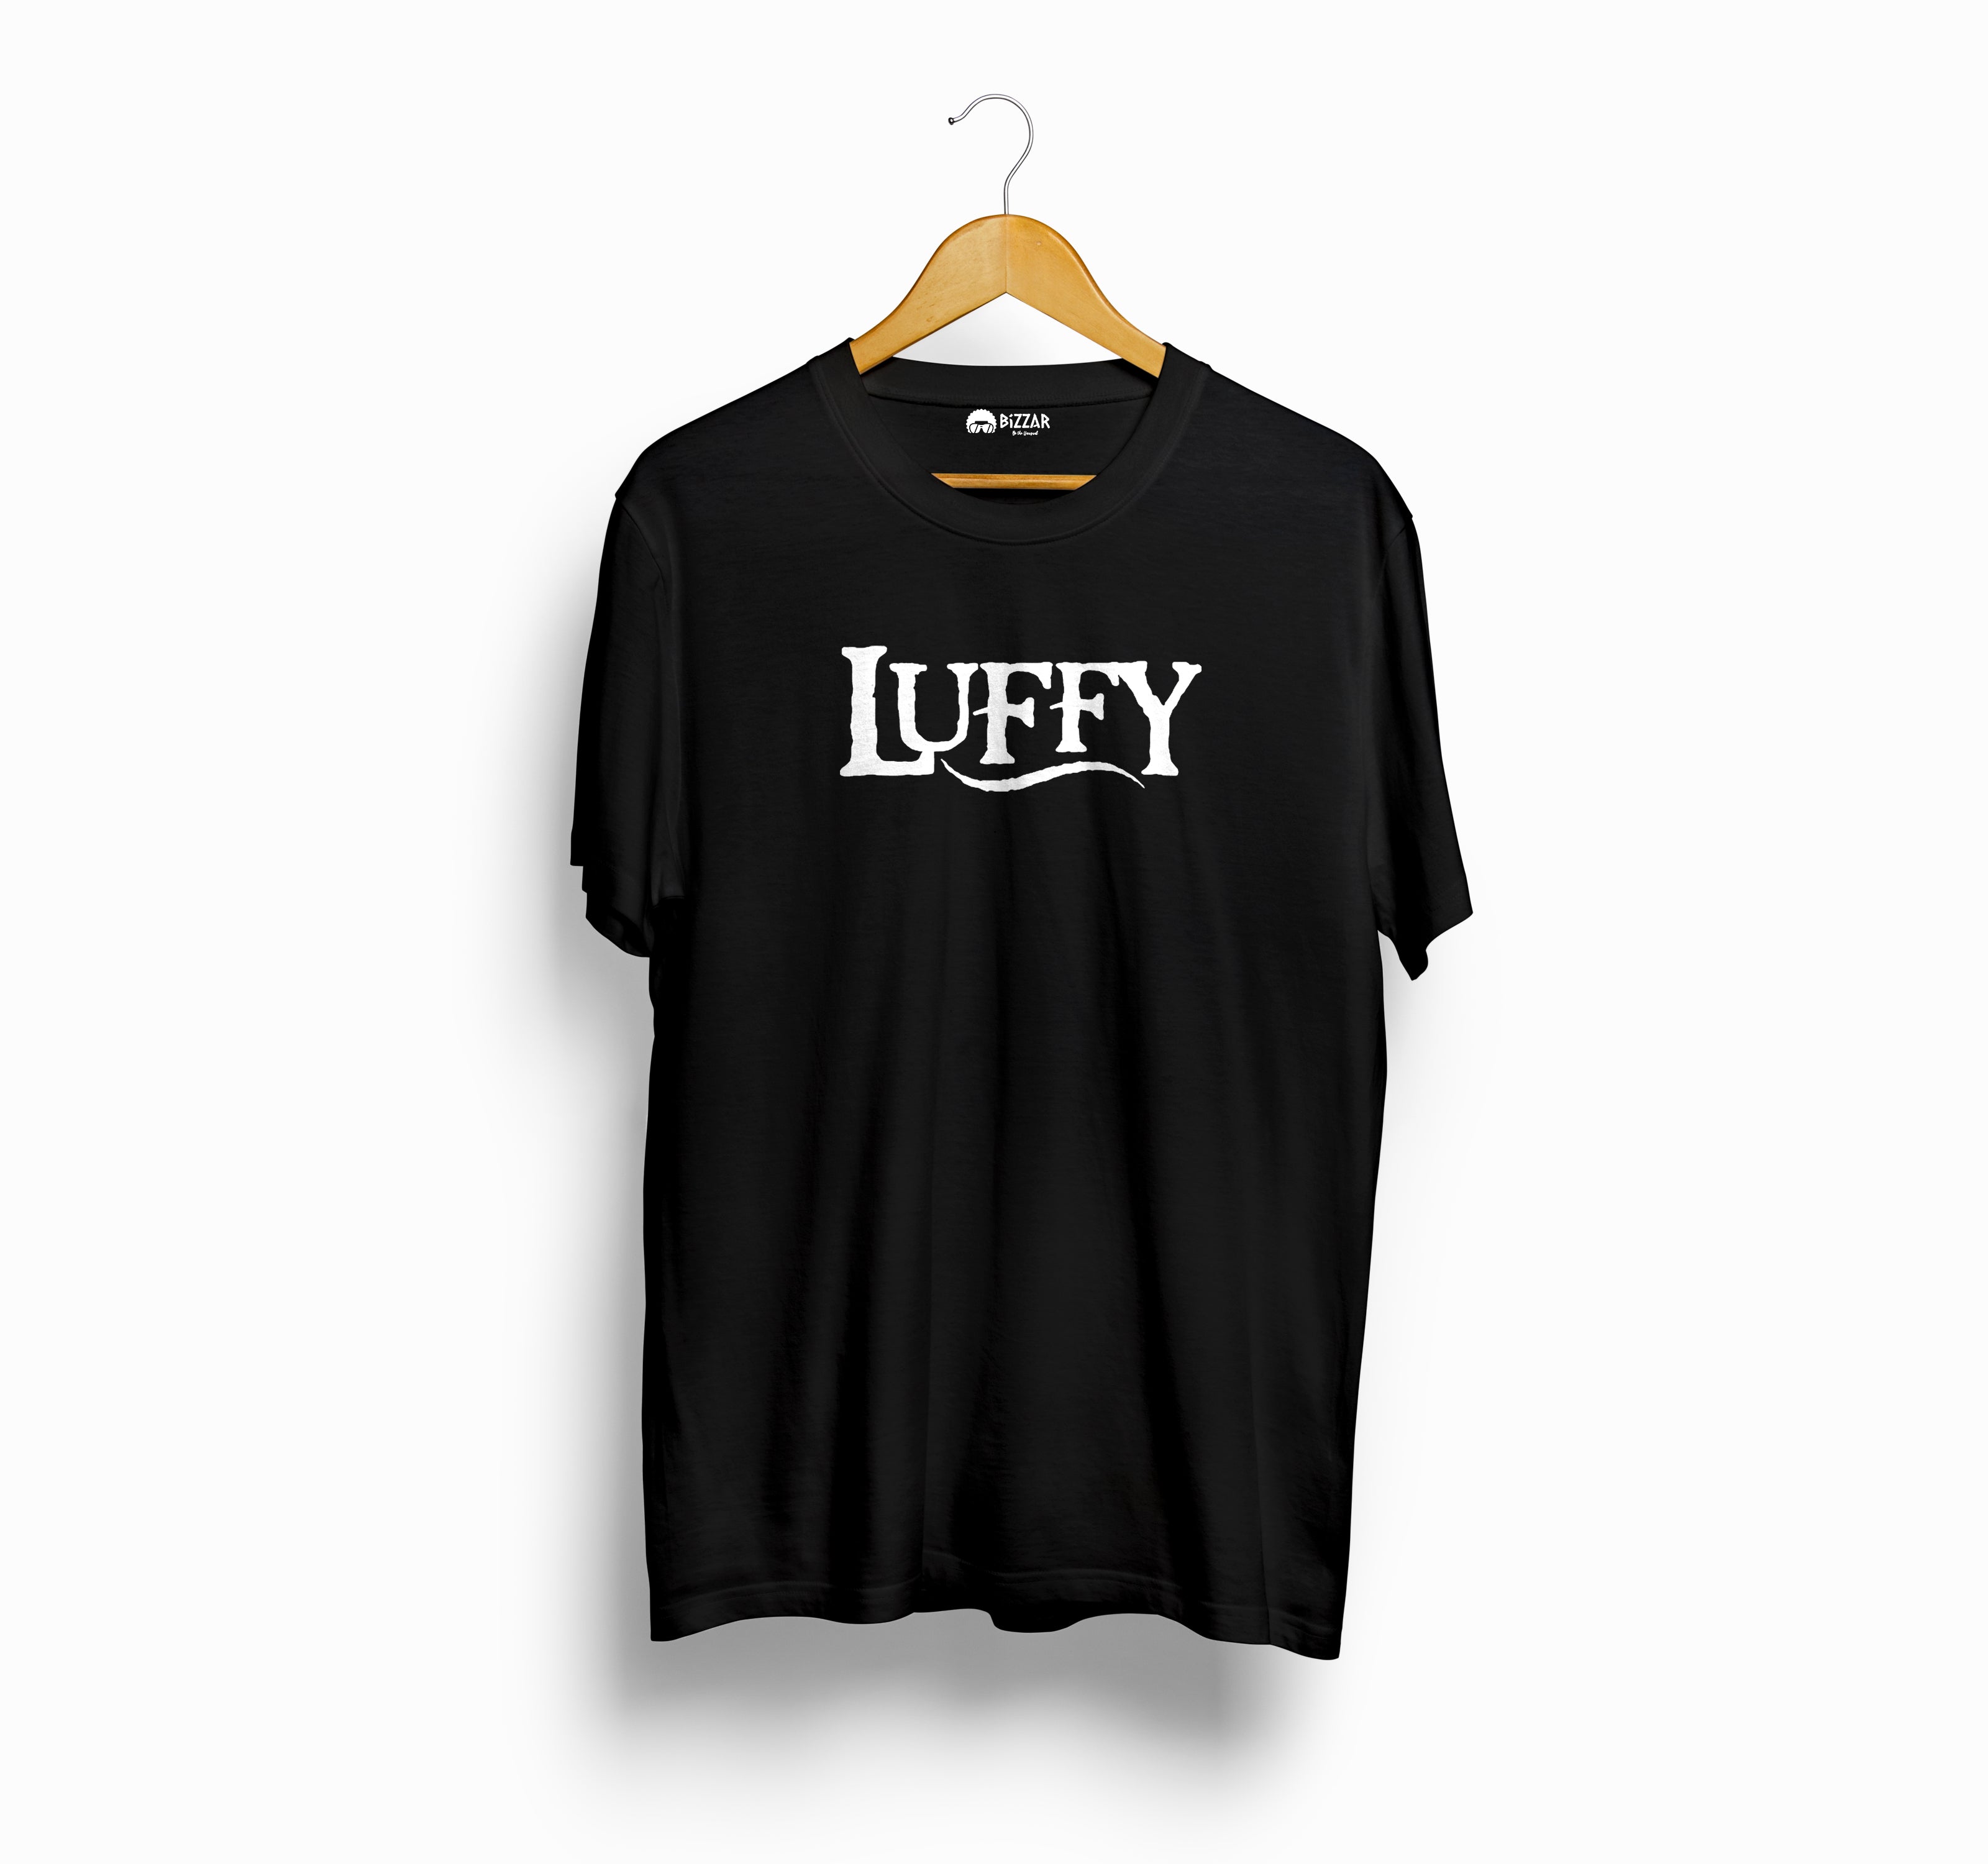 Bizzar's Monkey D. Luffy Graphic Oversized Black Color T-Shirt